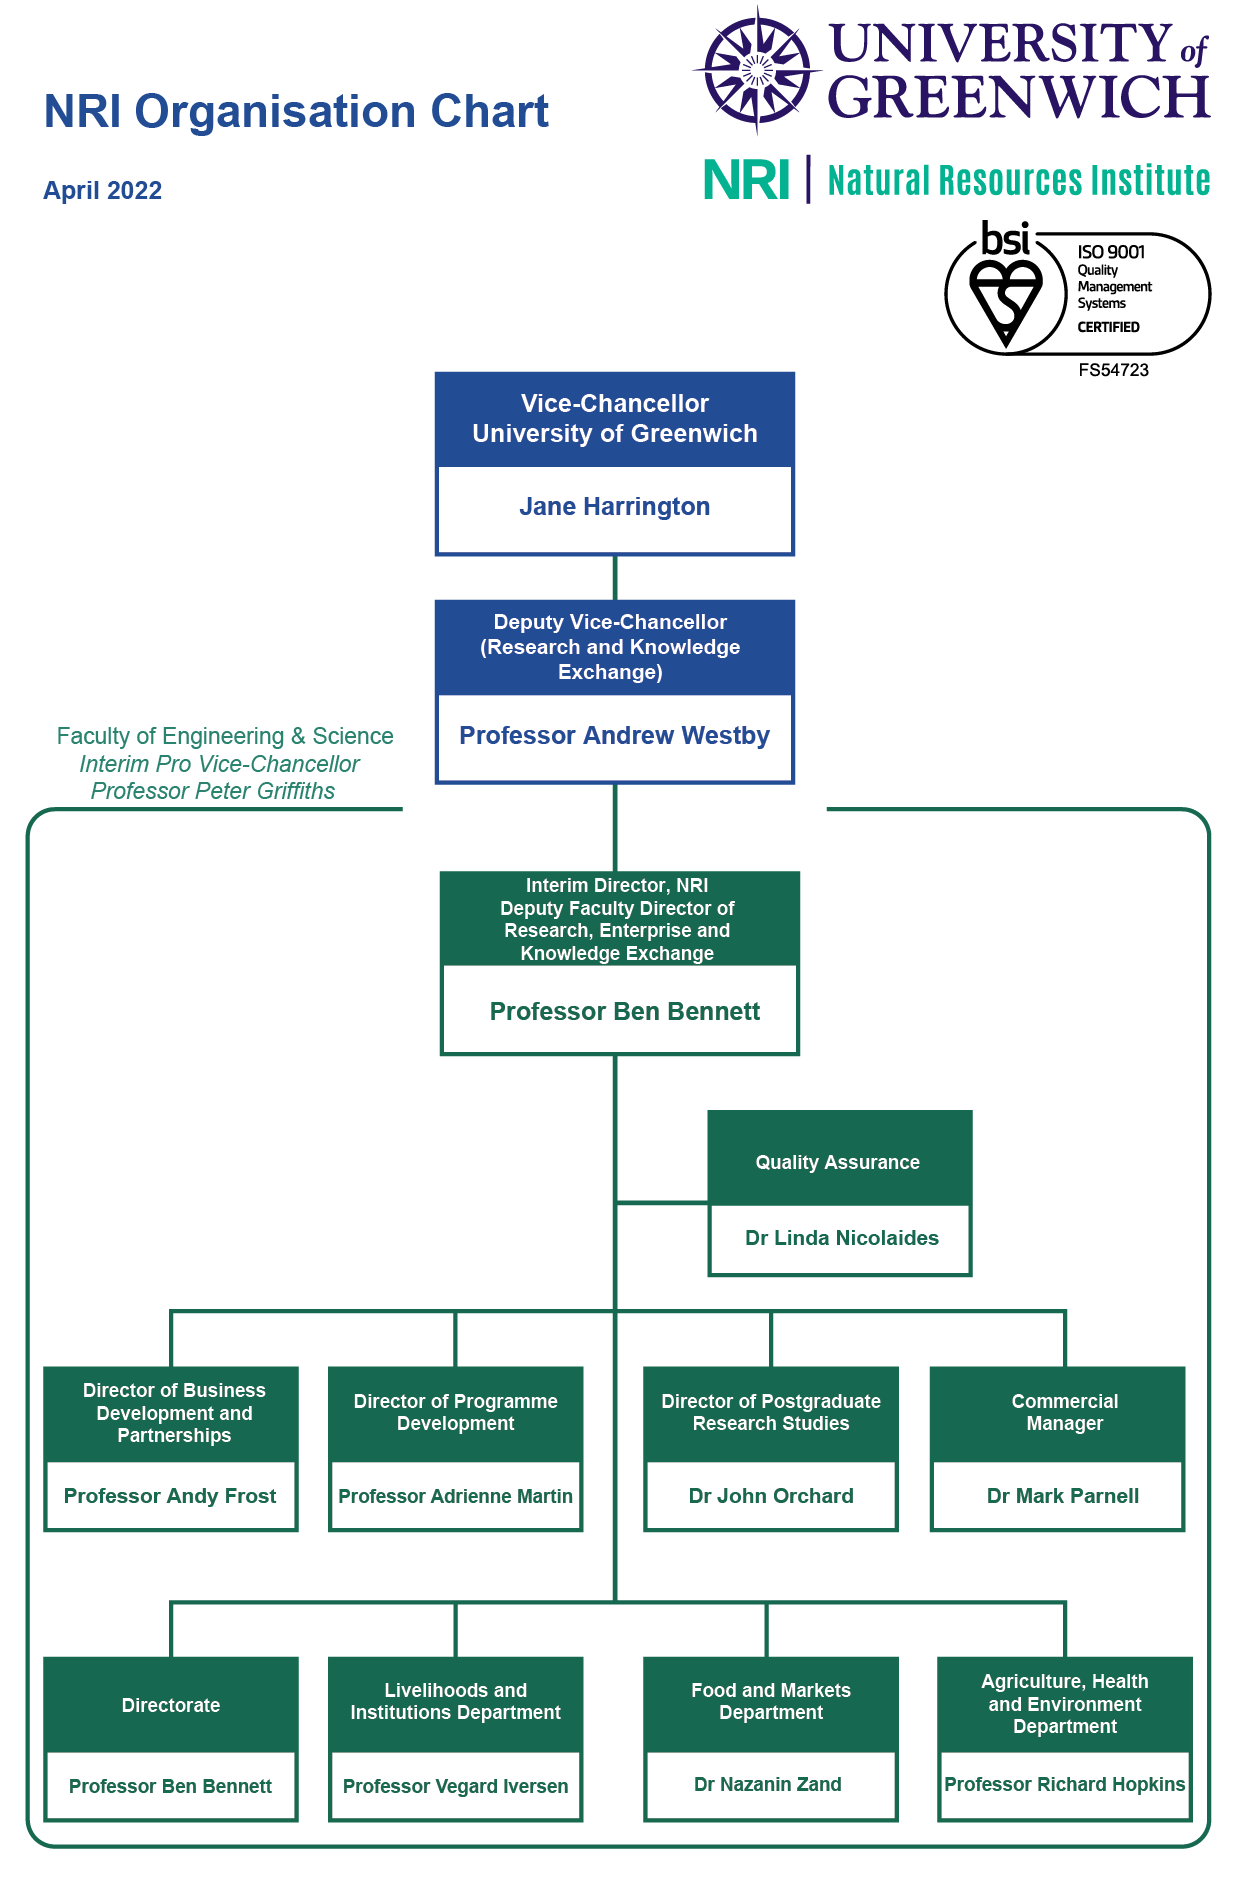 NRI Organisation Chart - April 2021